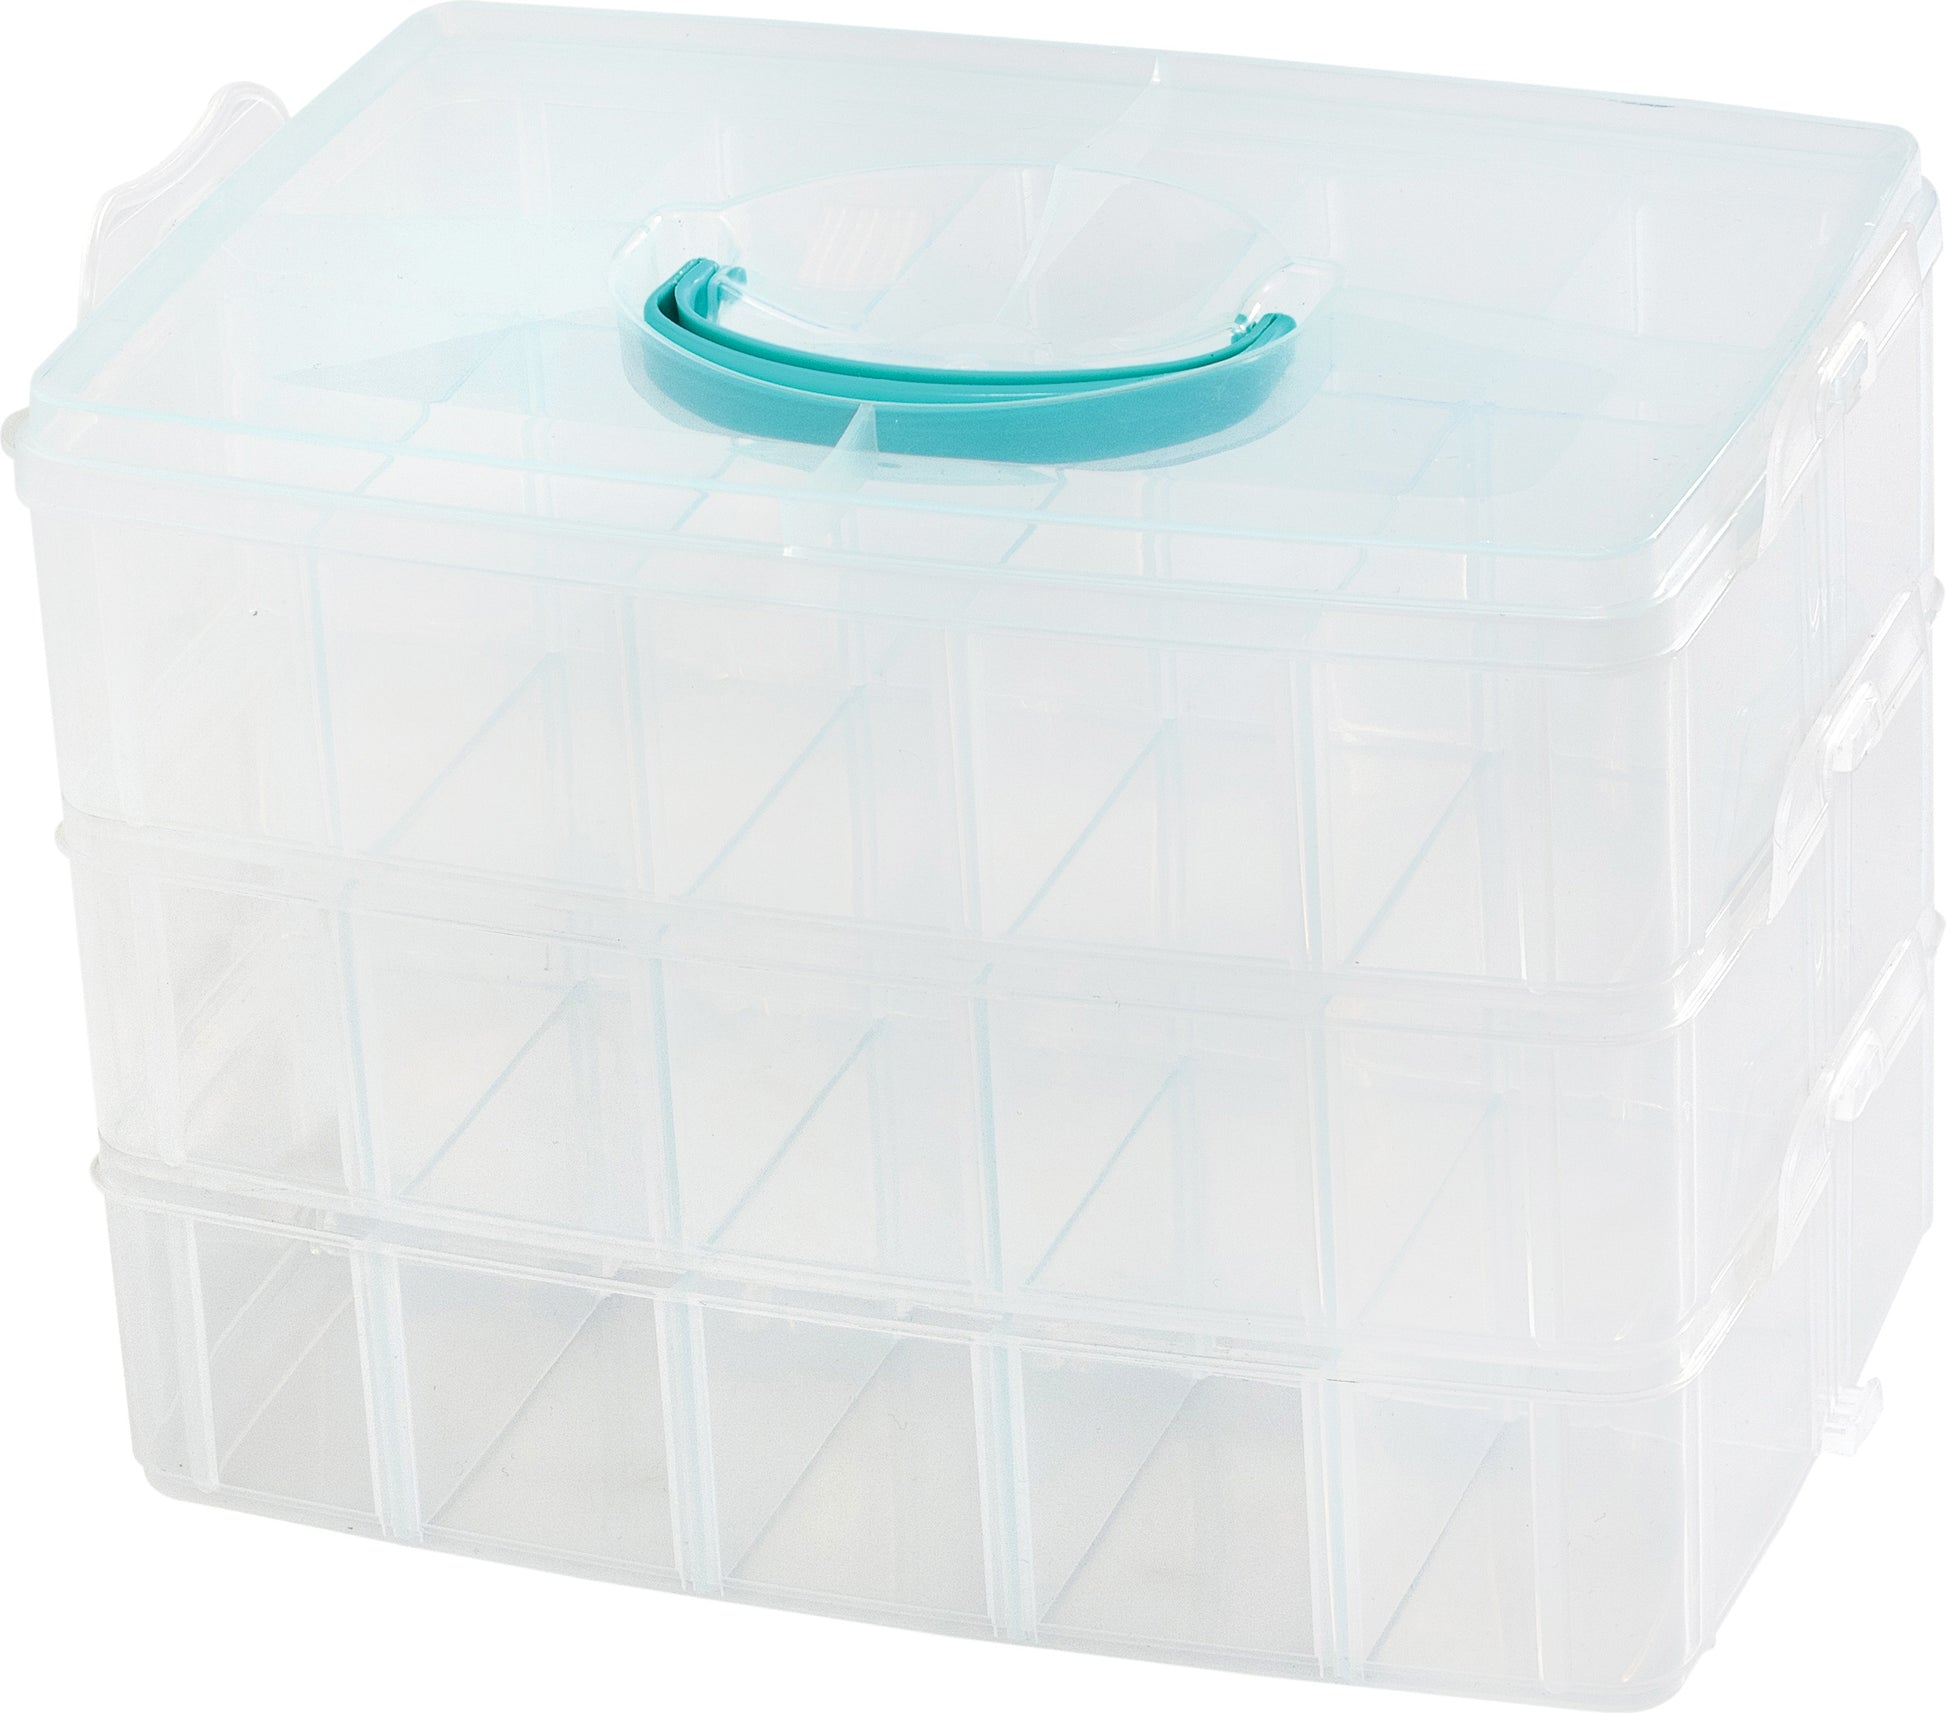 My Crafty Soul: Upgrade those cheap plastic storage bins